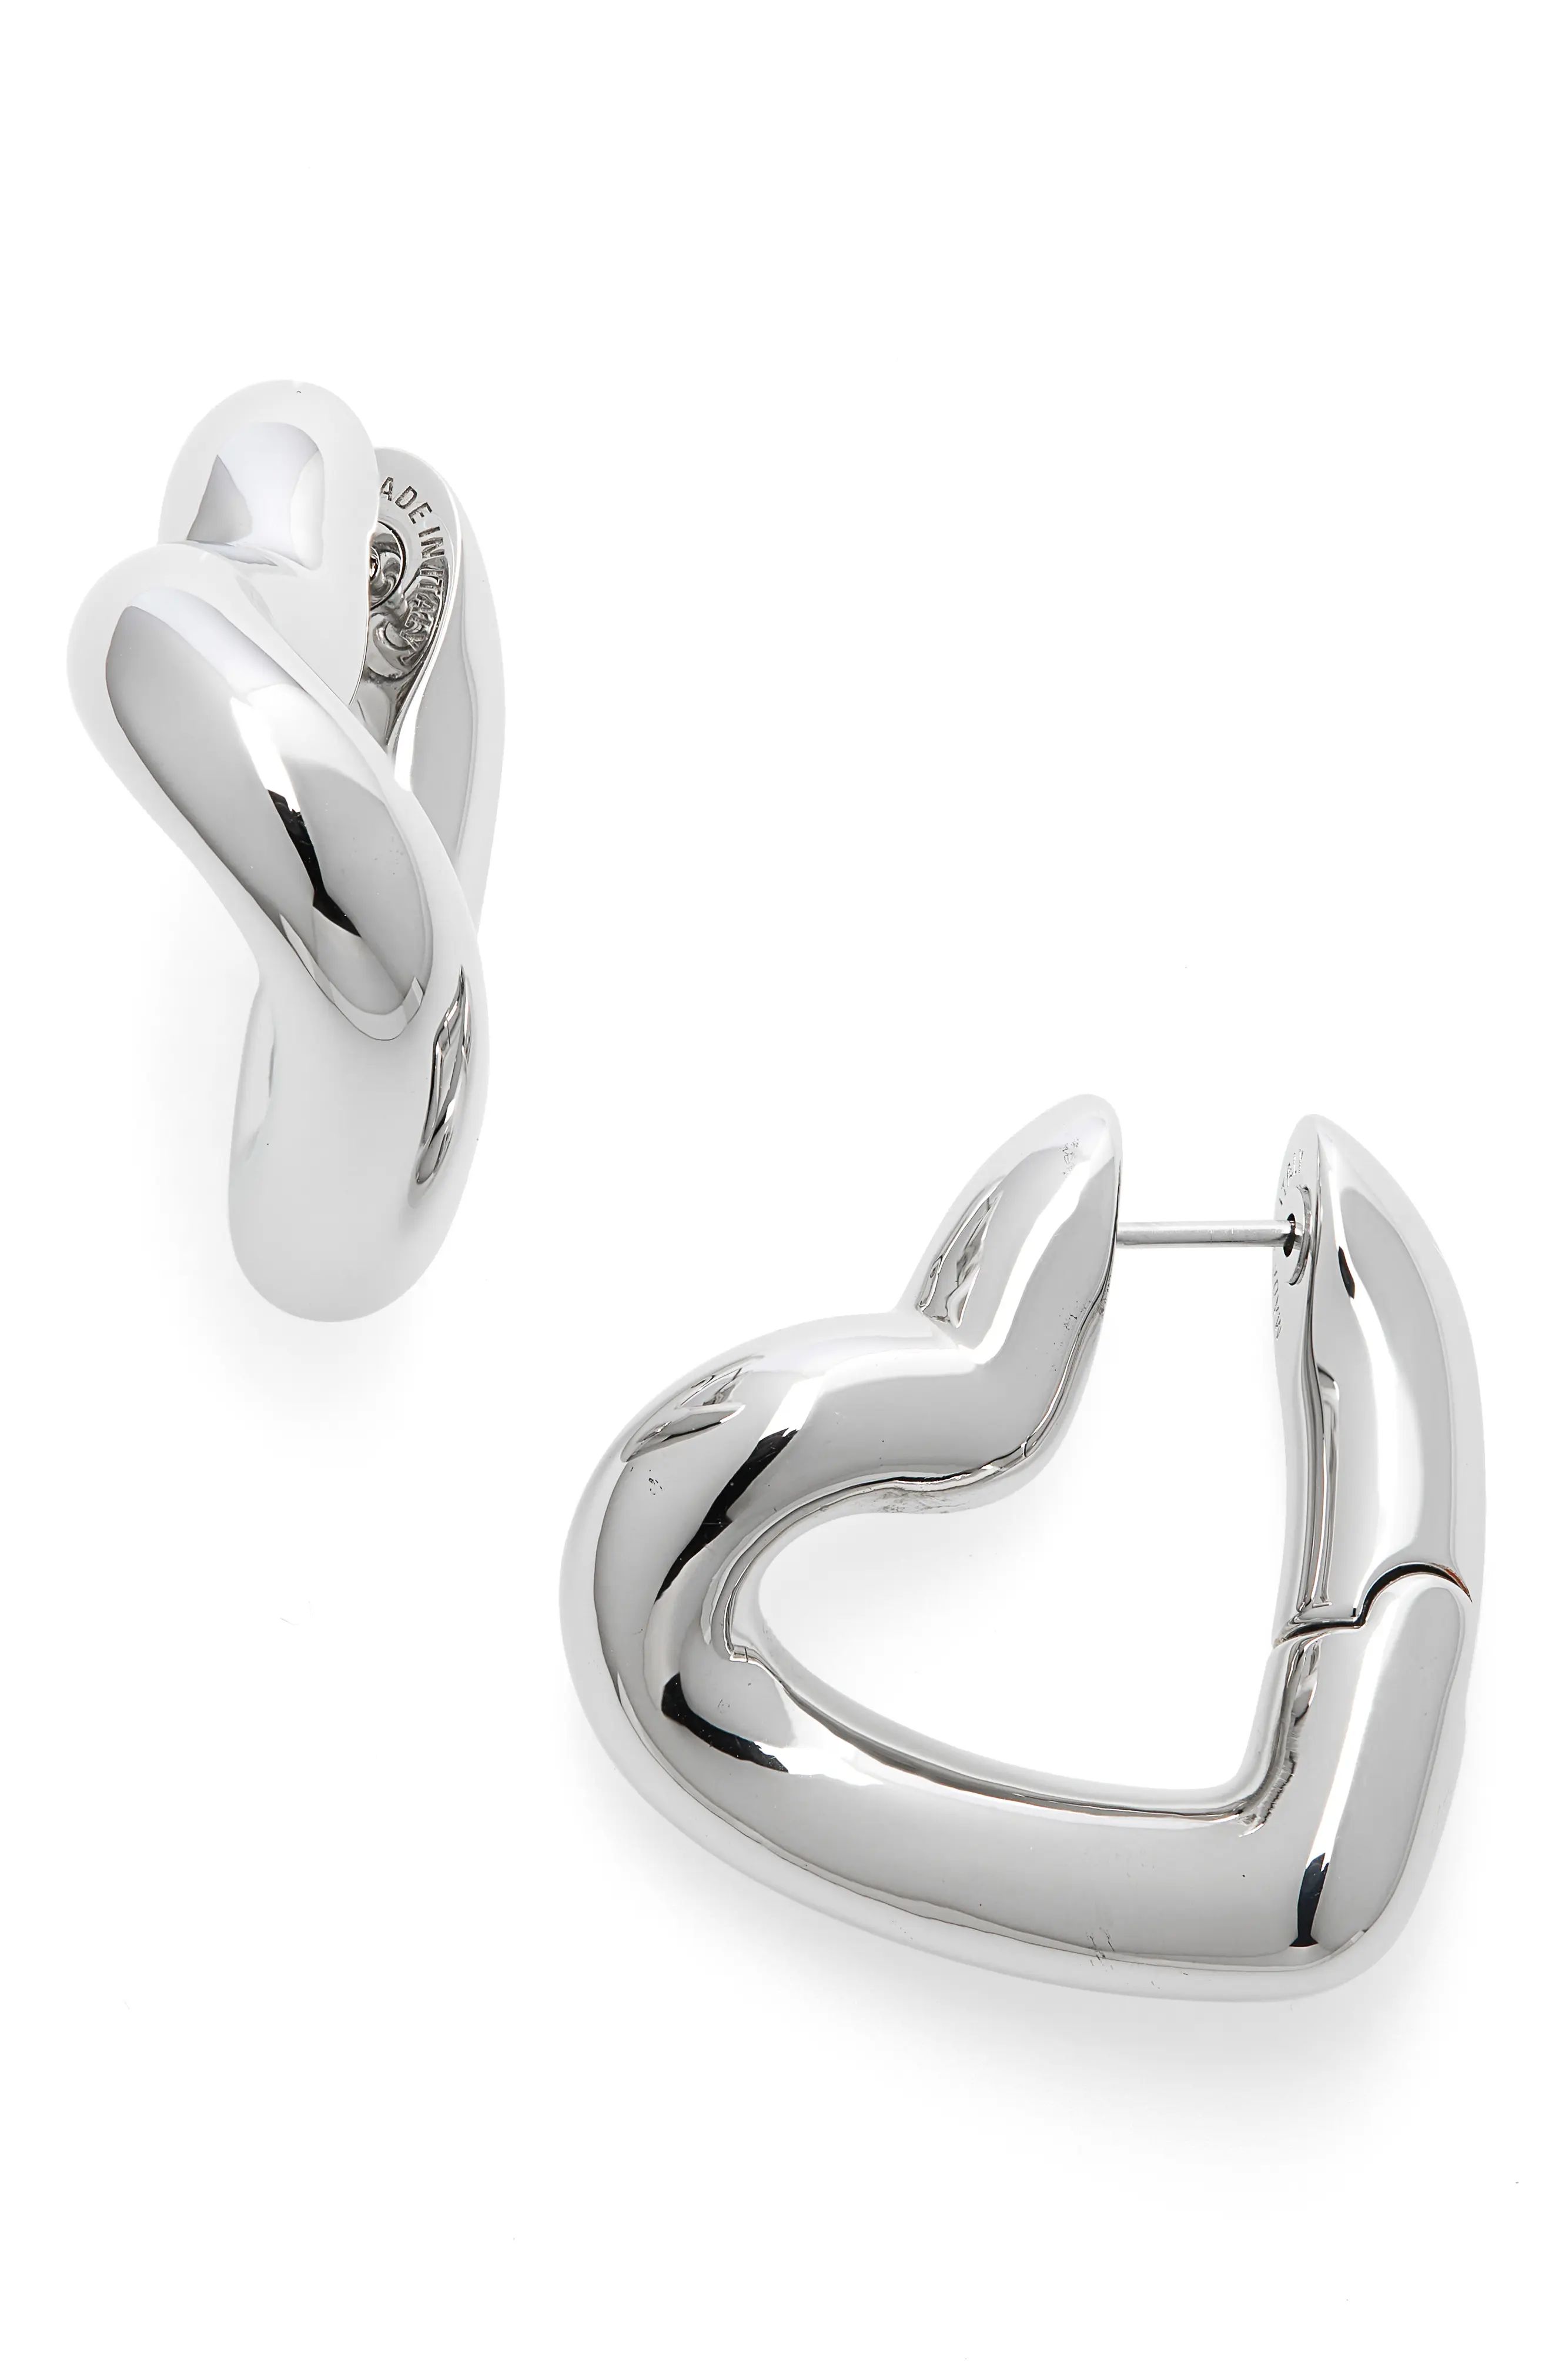 Balenciaga Loop Heart Earrings in Shiny Silver at Nordstrom | Nordstrom